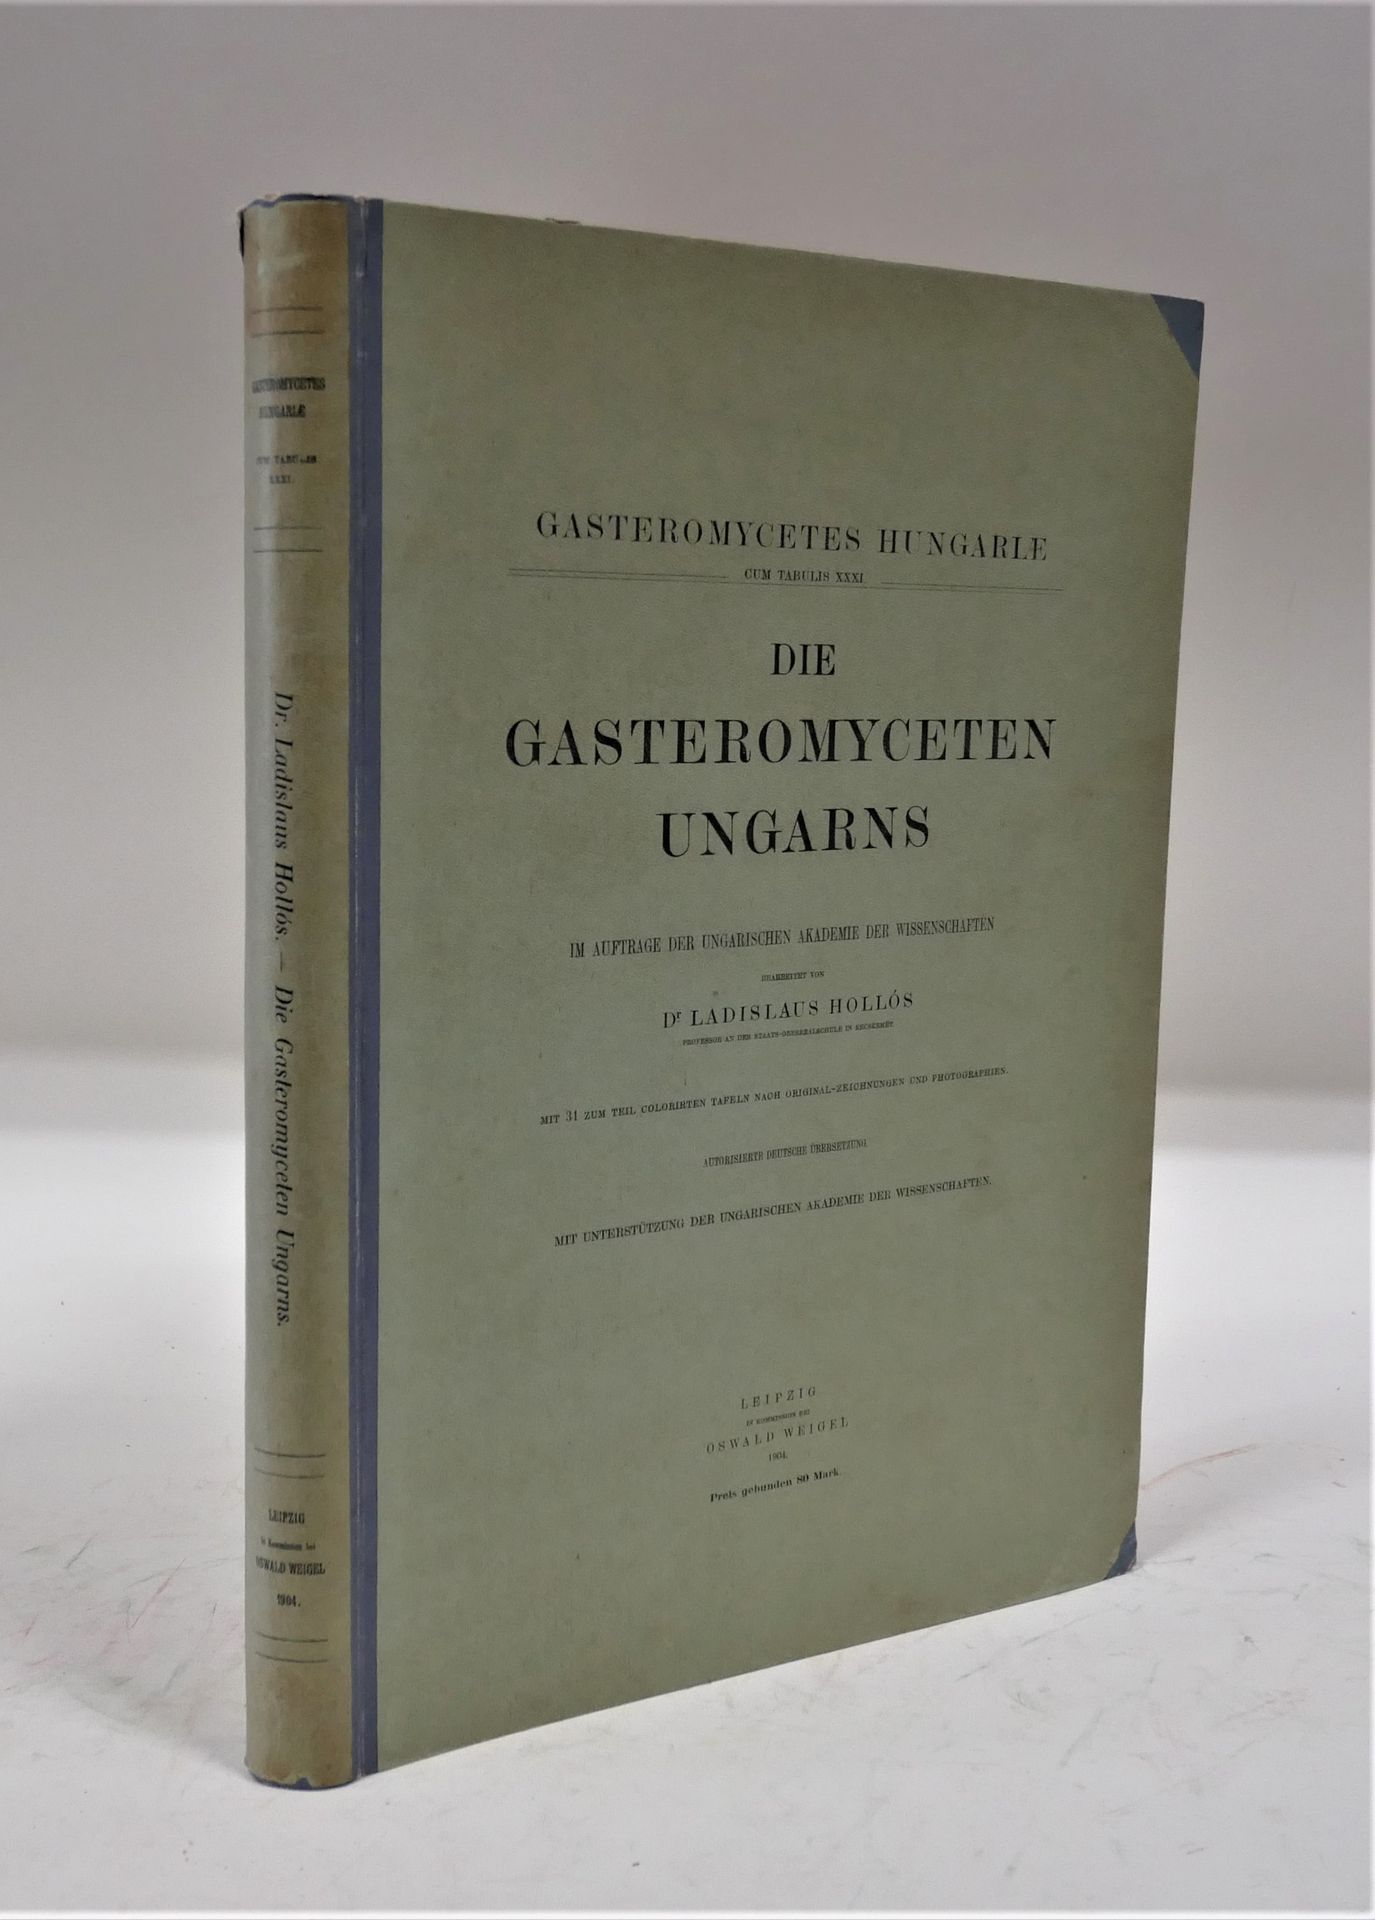 Null Ladislaus HOLLOS.

Die gasteromyceten ungaris.奥斯瓦尔德-魏格尔，1904年。在乡下。